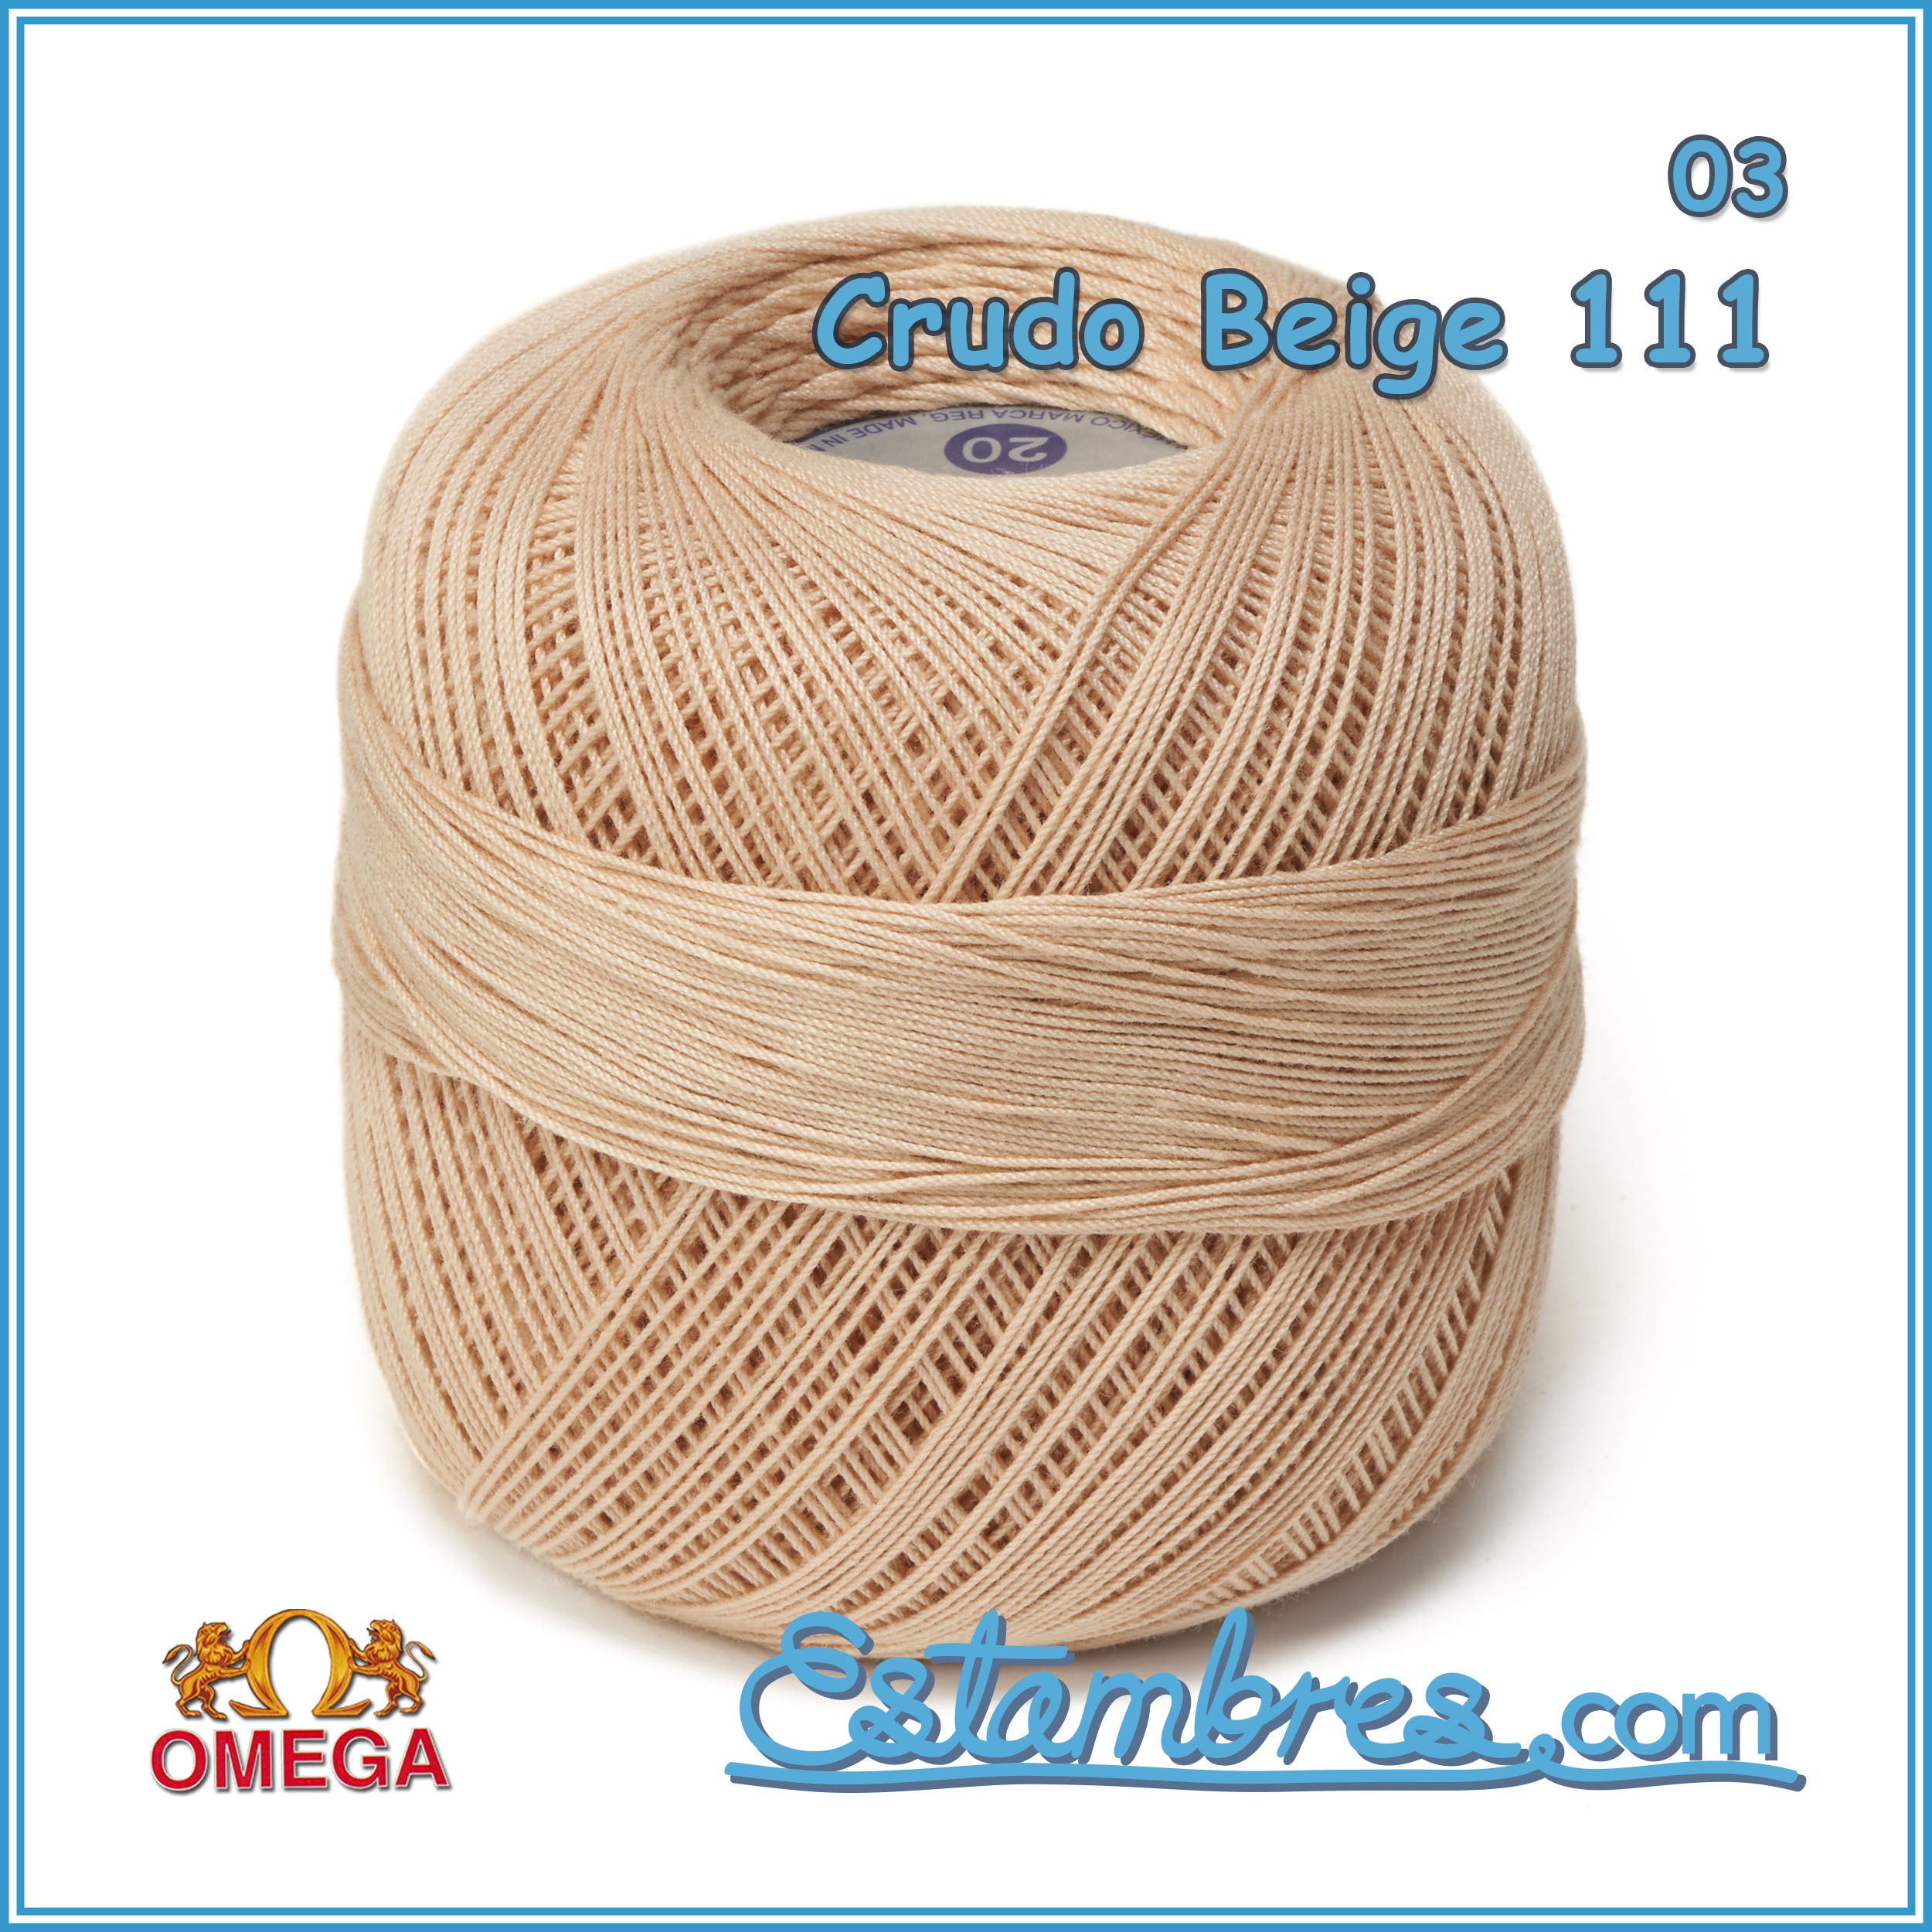 Crochet Omega gruesos 10,20,30